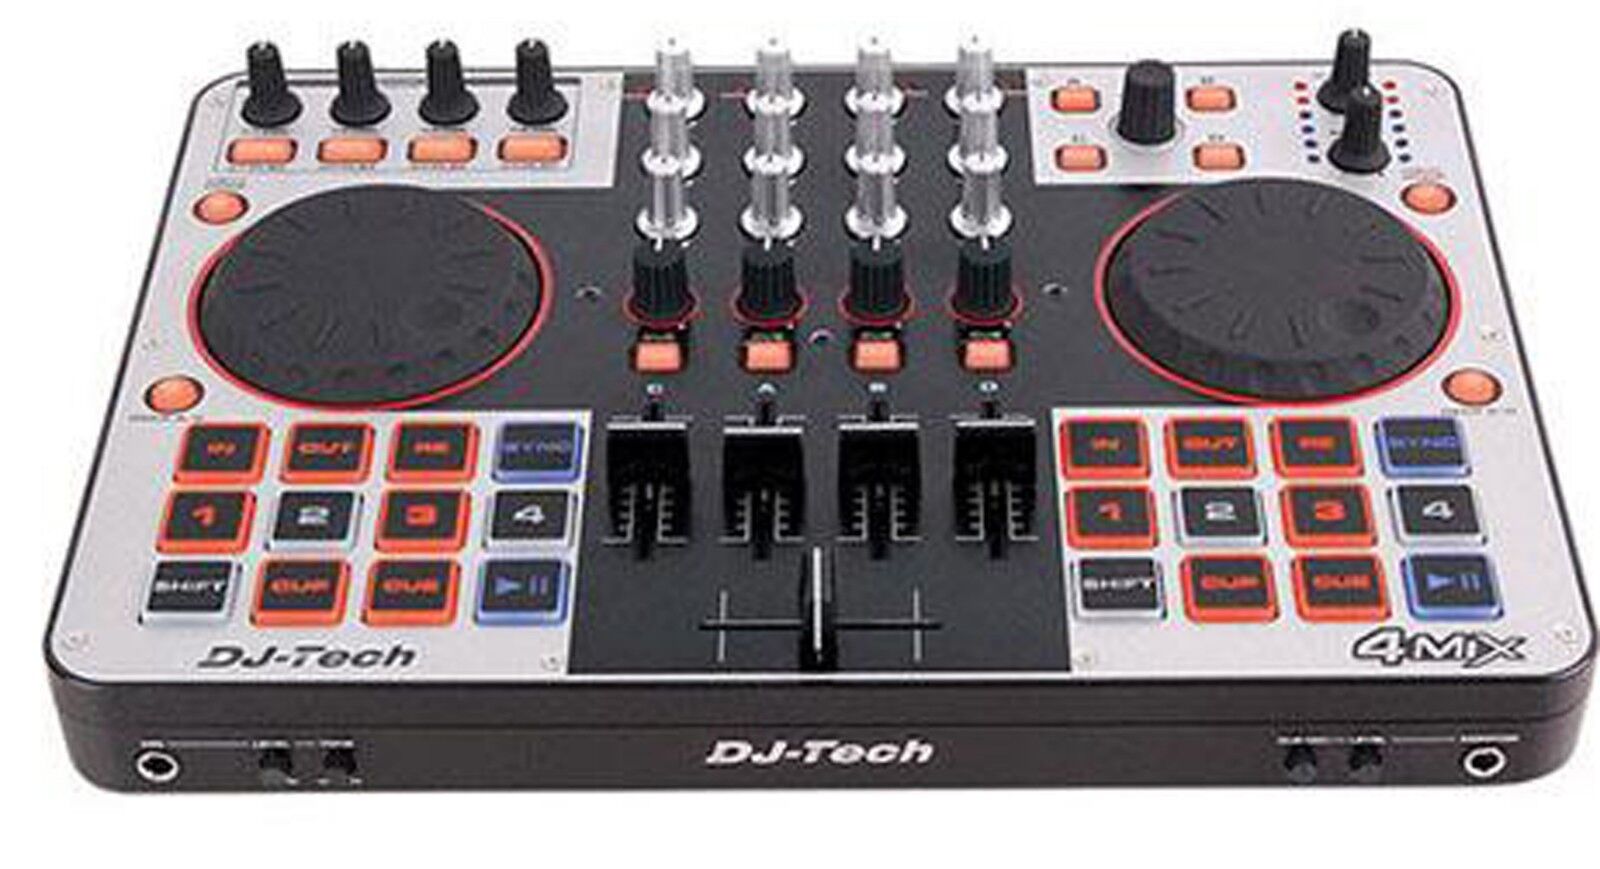 DJ-Tech - Surprise price 4MIX 4-Channel Controller Virtu Interface + Save money w Audio